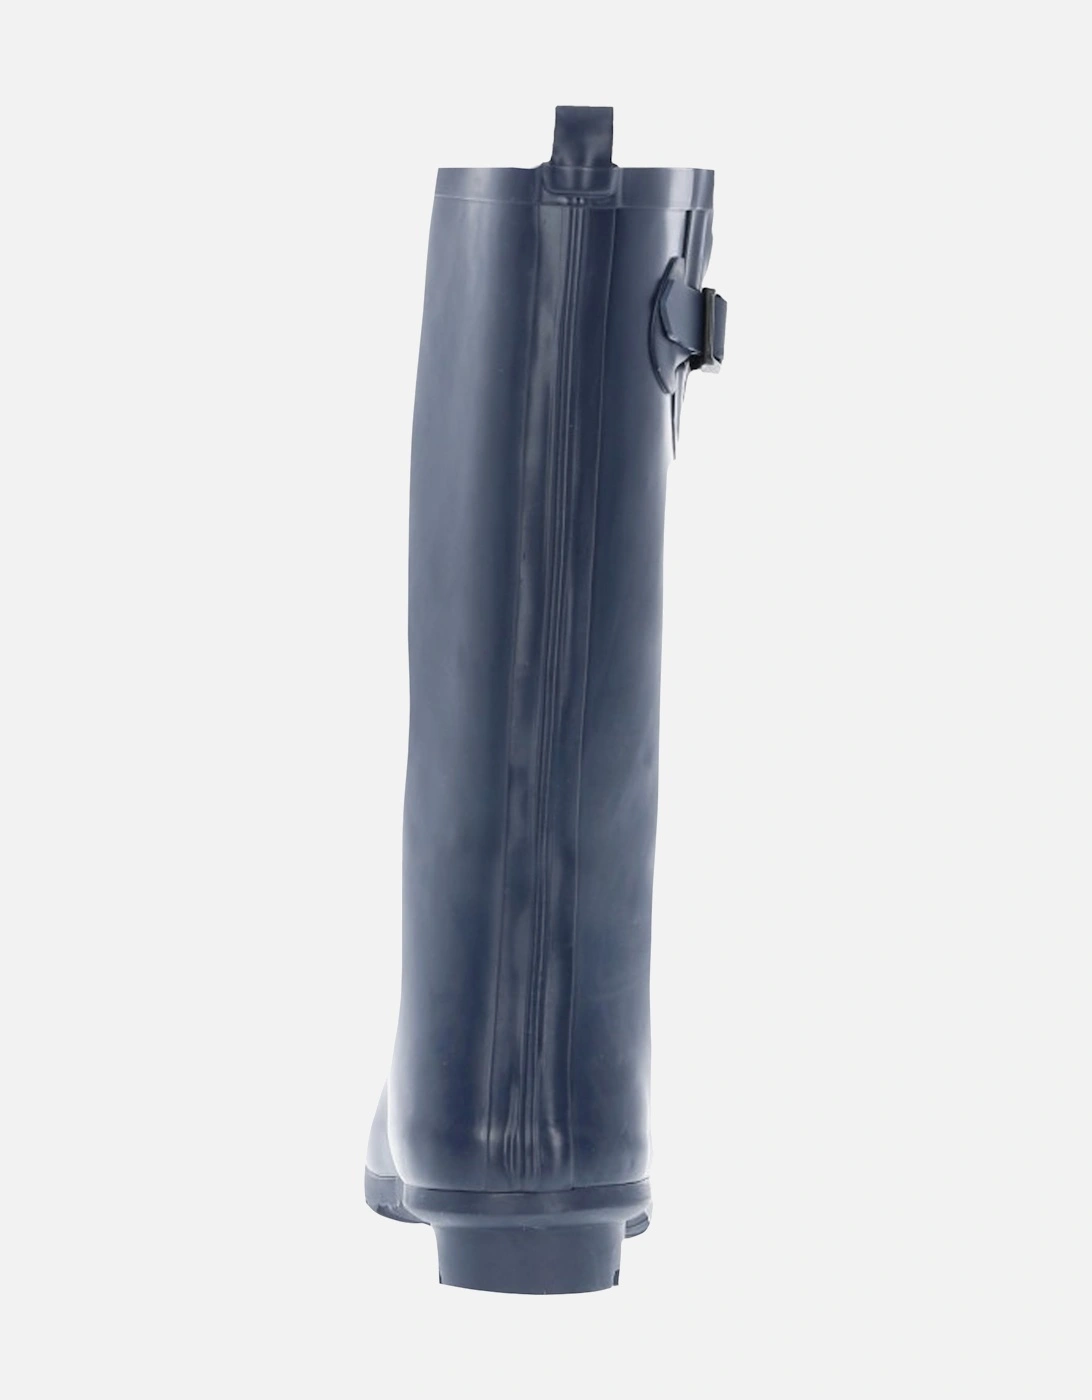 Womens/Ladies Damon Waterproof Wellington Boots